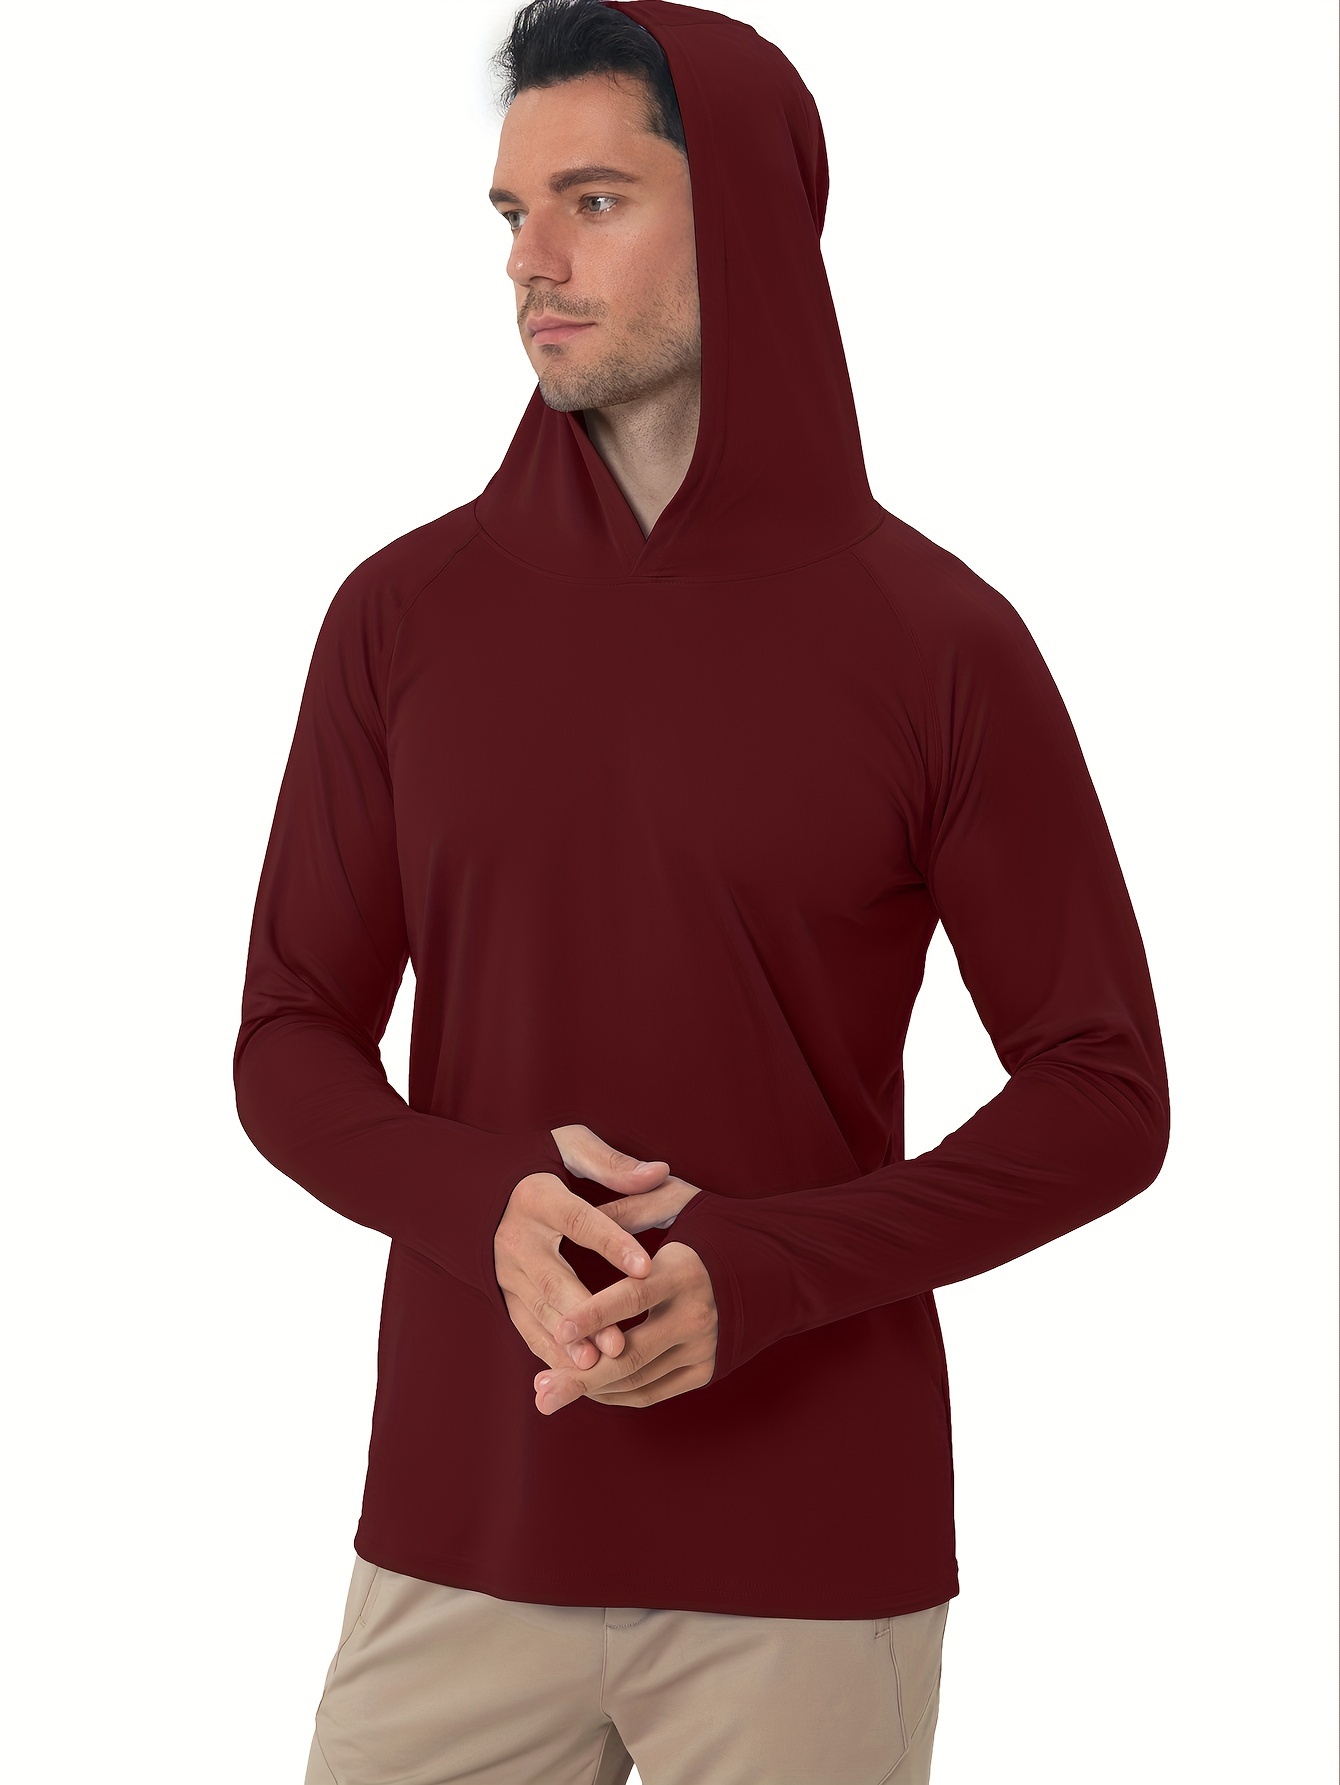  Roadbox Long Sleeve SPF/UV Hoodies For Men